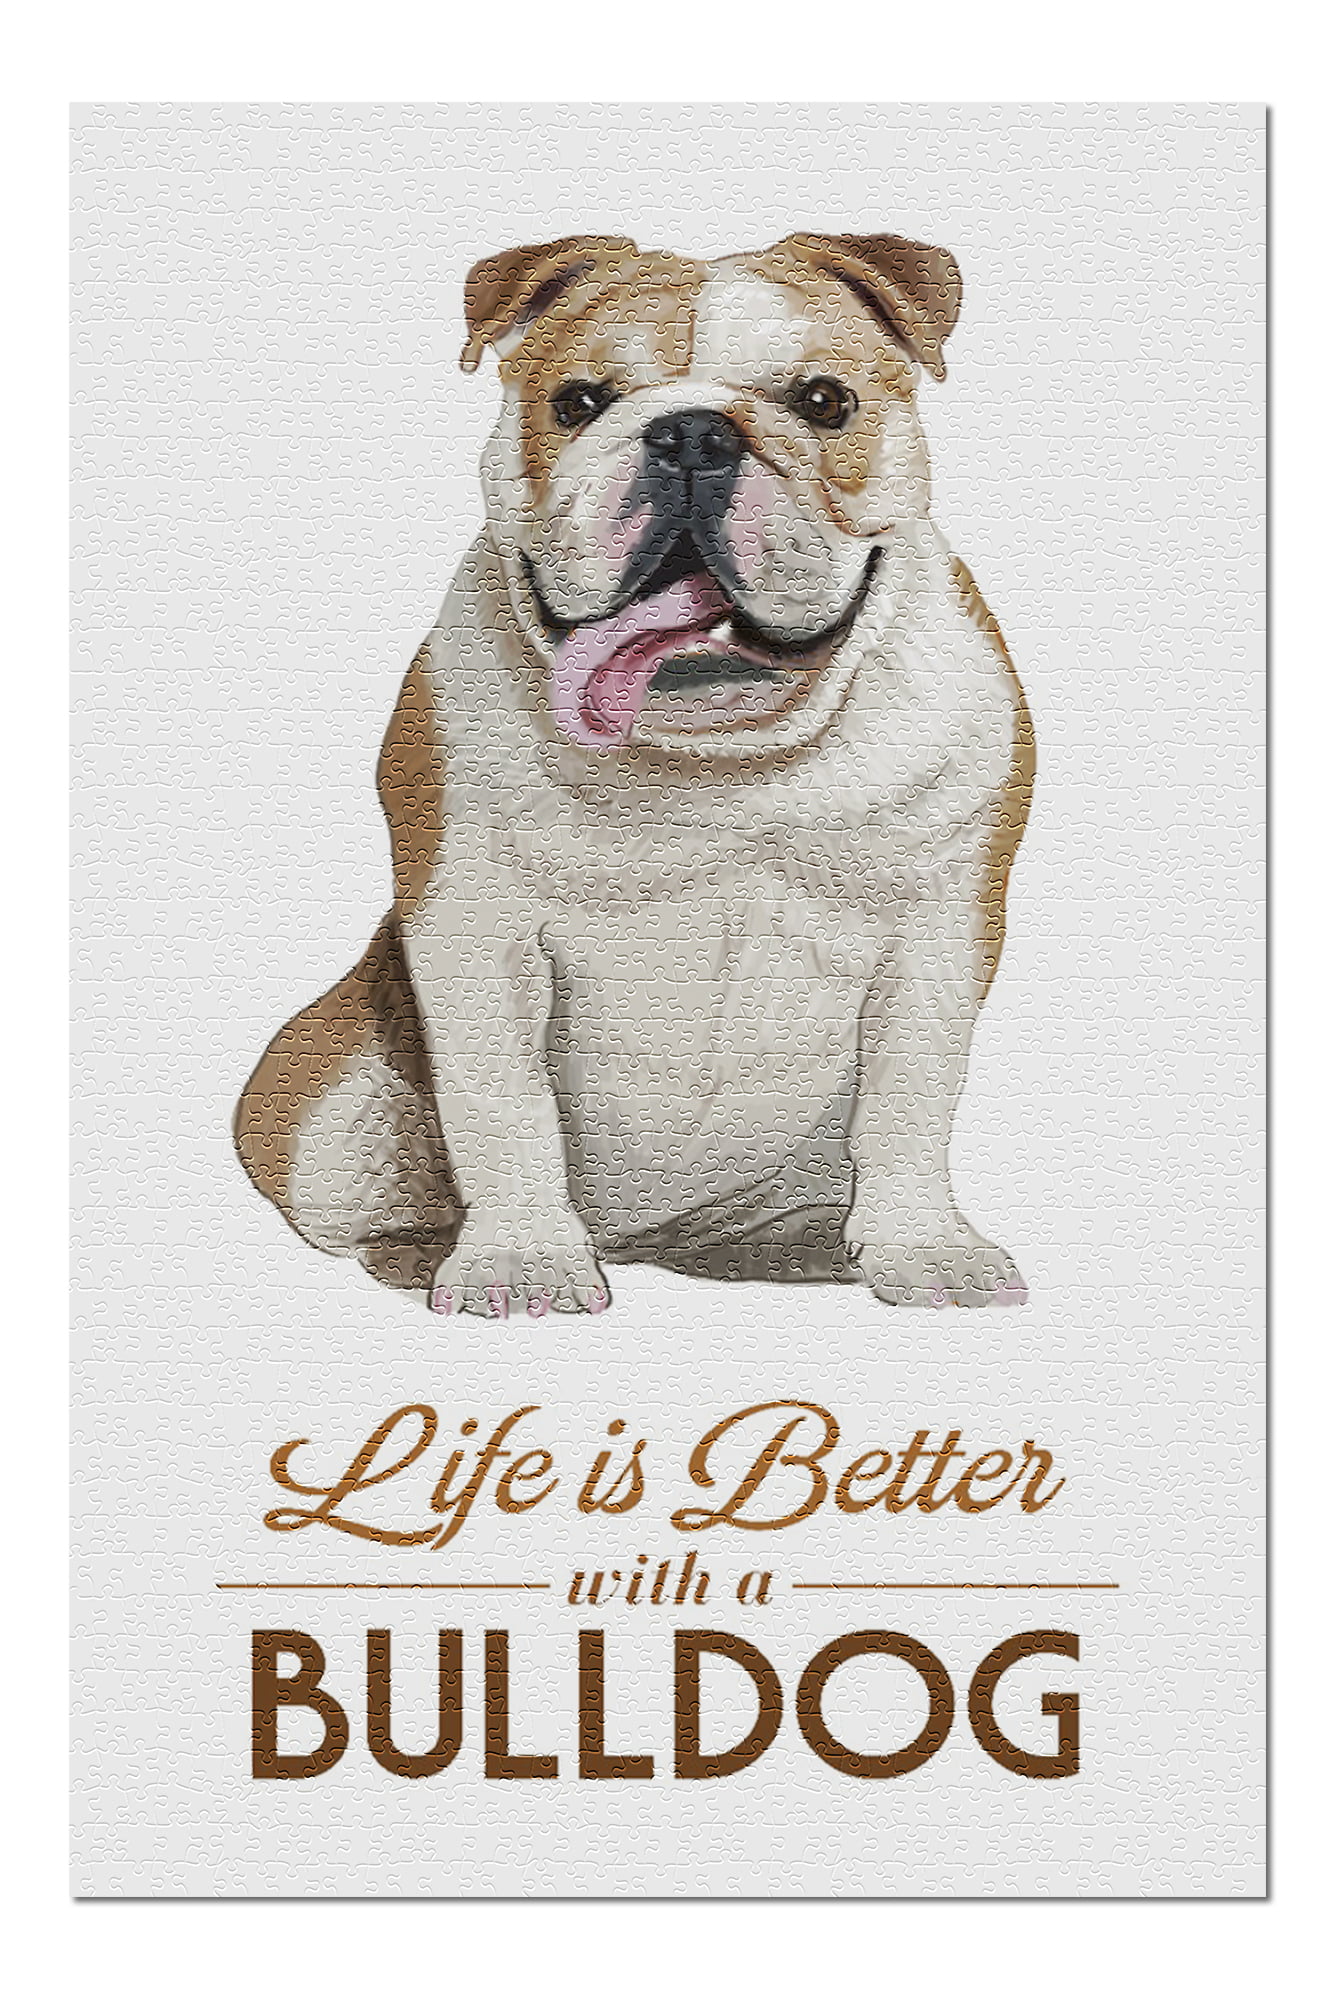 Bulldog - Life is Better - White Background (20x30 Premium ...